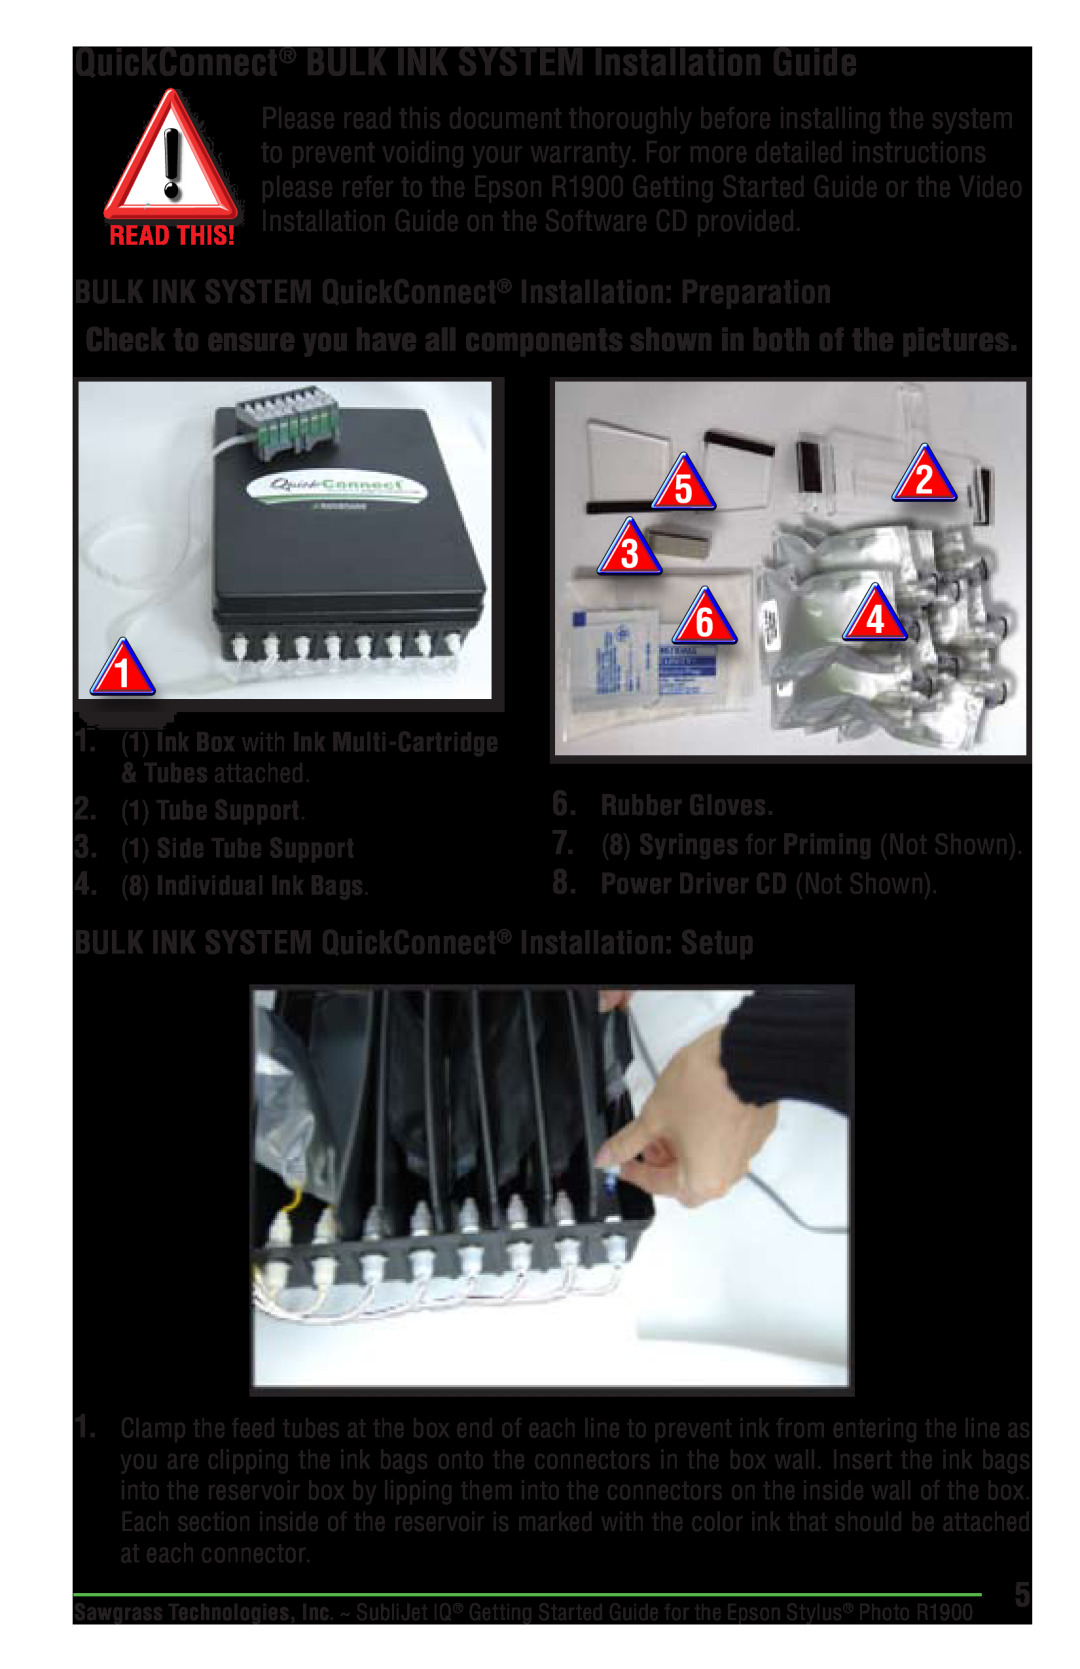 Epson R1900 manual QuickConnect BULK INK SYSTEM Installation Guide, BULK INK SYSTEM QuickConnect Installation Preparation 